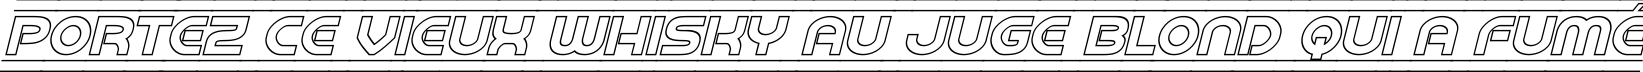 Пример написания шрифтом Barcade Outline Italic текста на французском